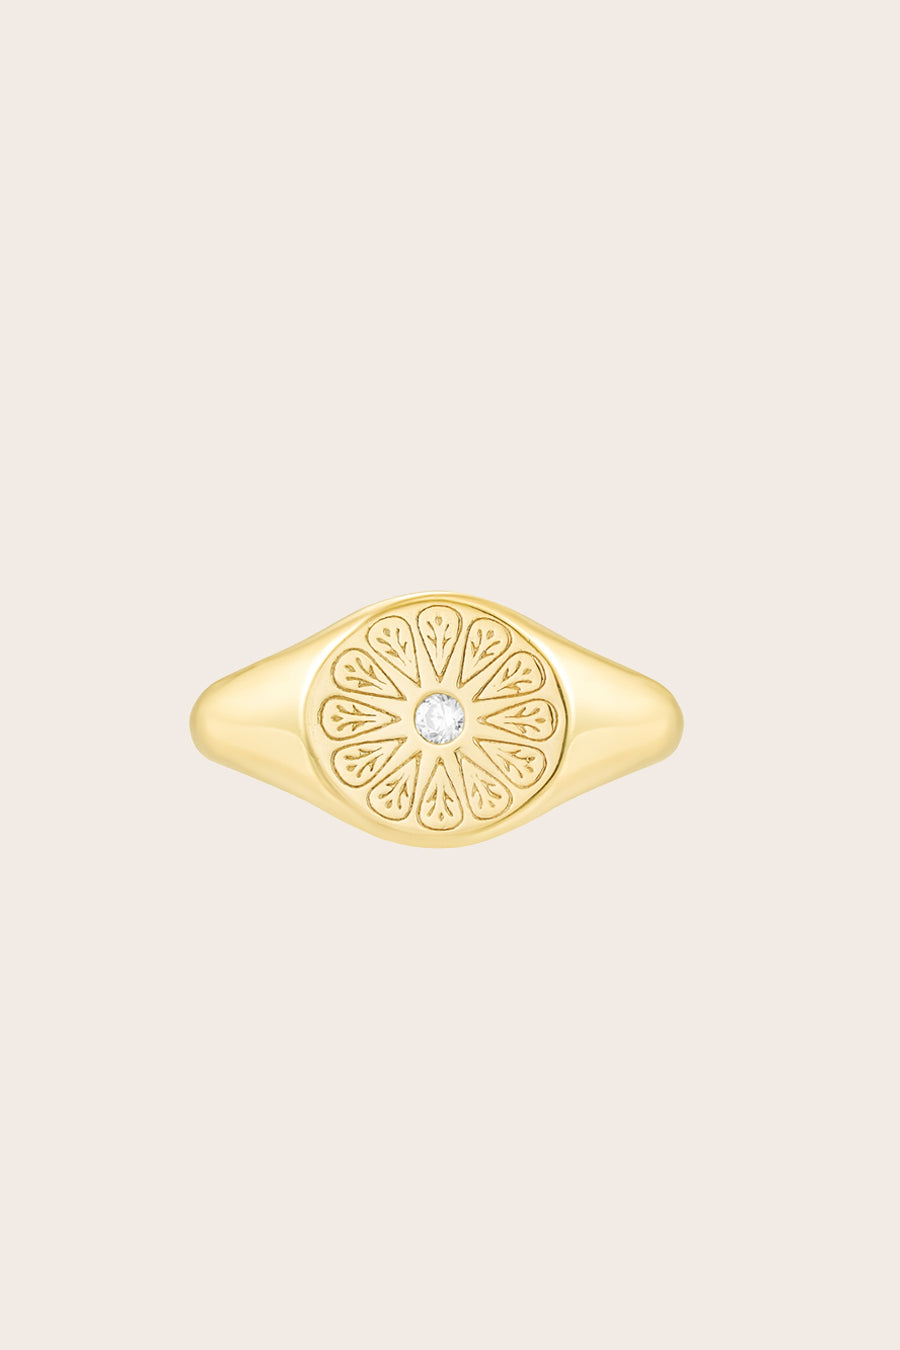 Gold April Birthstone Ring on cream background